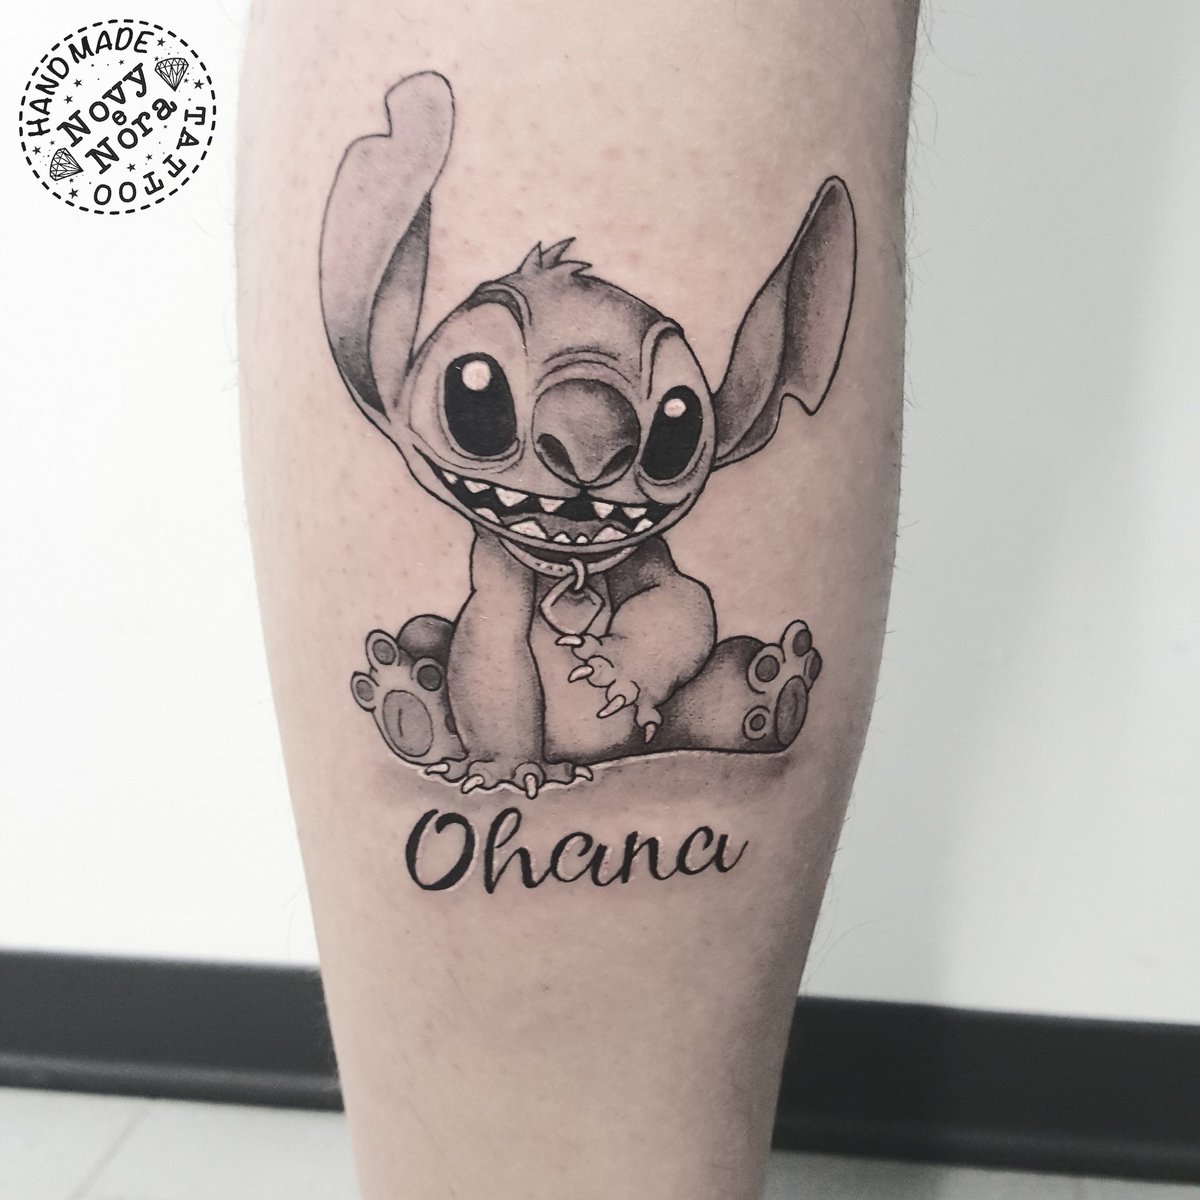 Ohana Tattoo by InkedAriella on DeviantArt